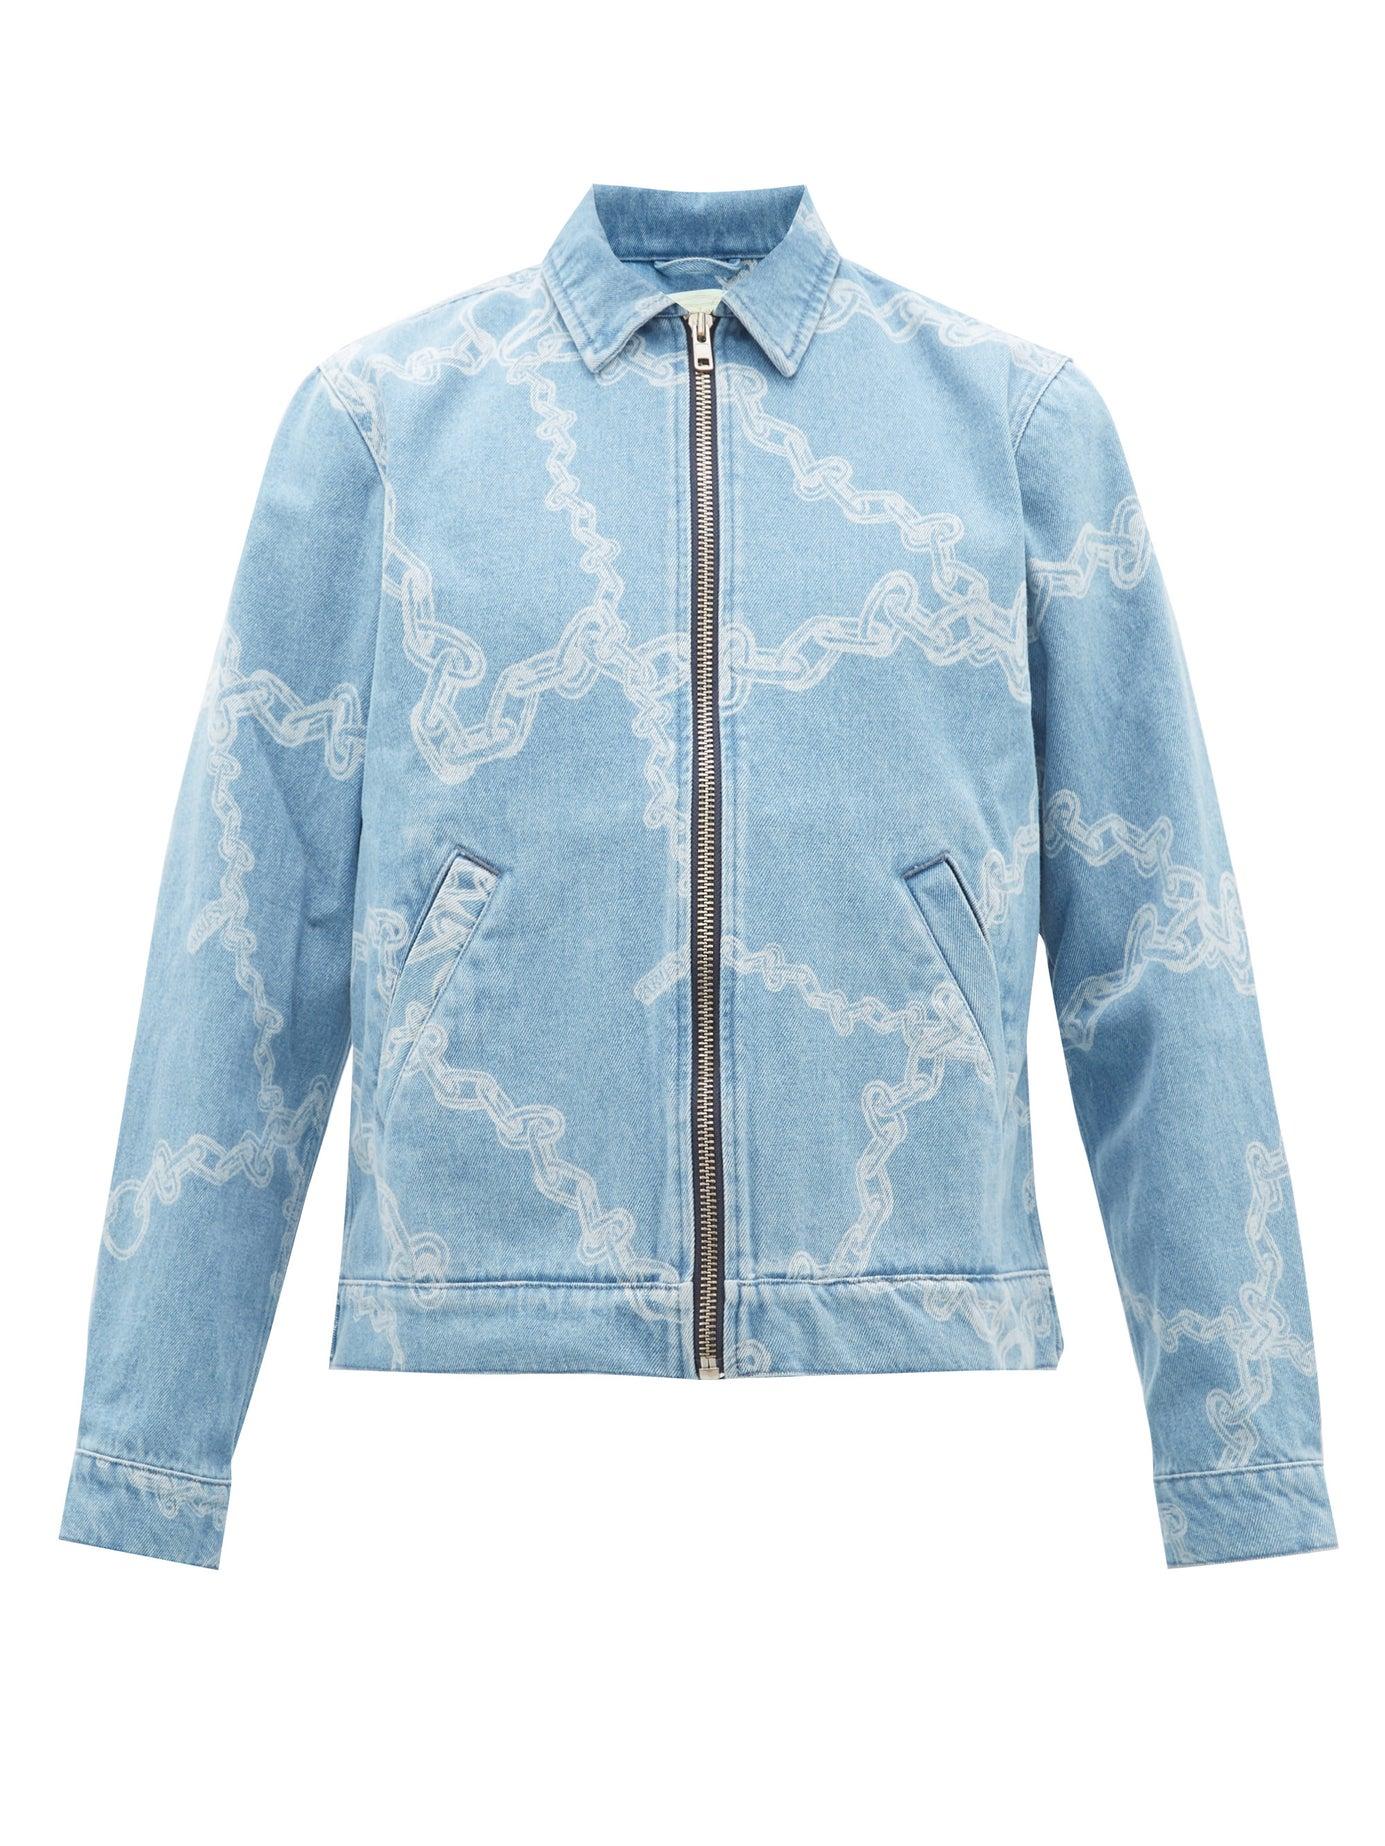 Aries Cotton Chain Print Denim Jacket in Blue for Men - Lyst